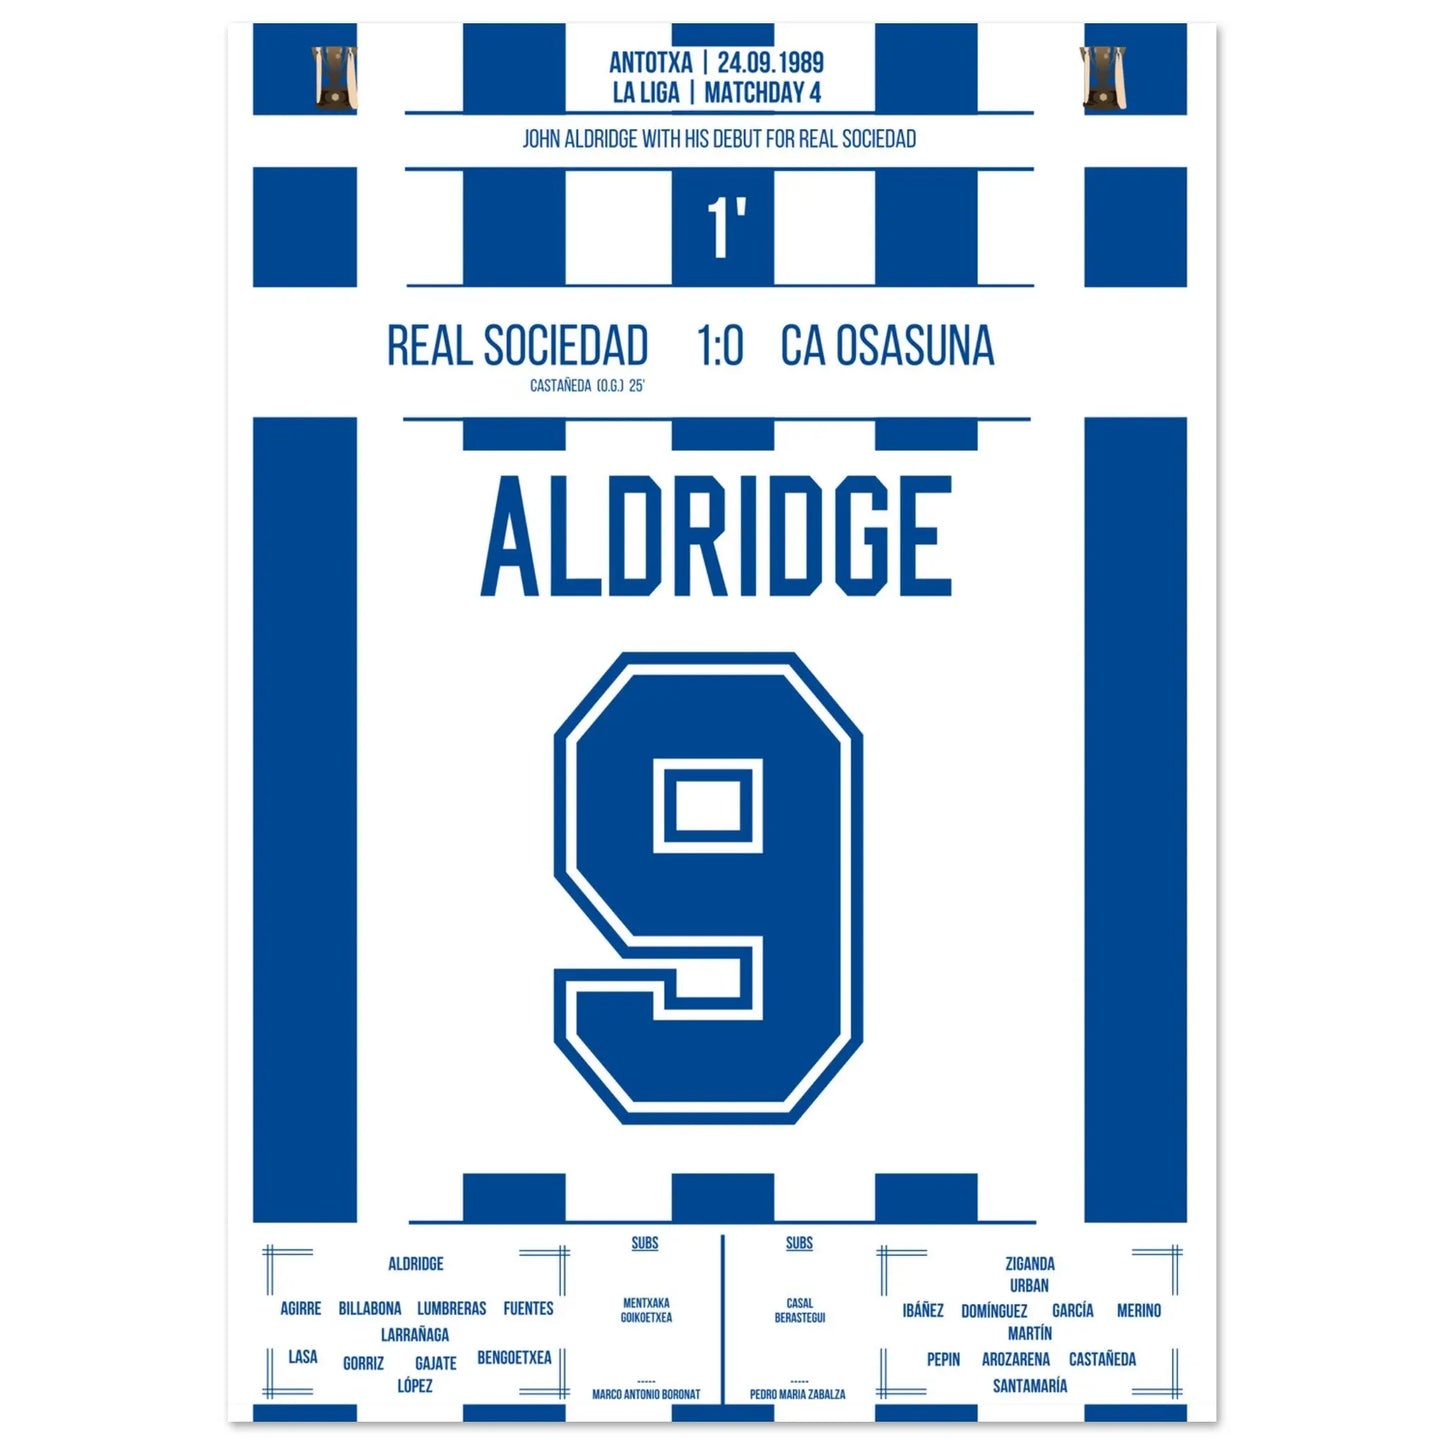 John Aldridge's debut game for Real Sociedad